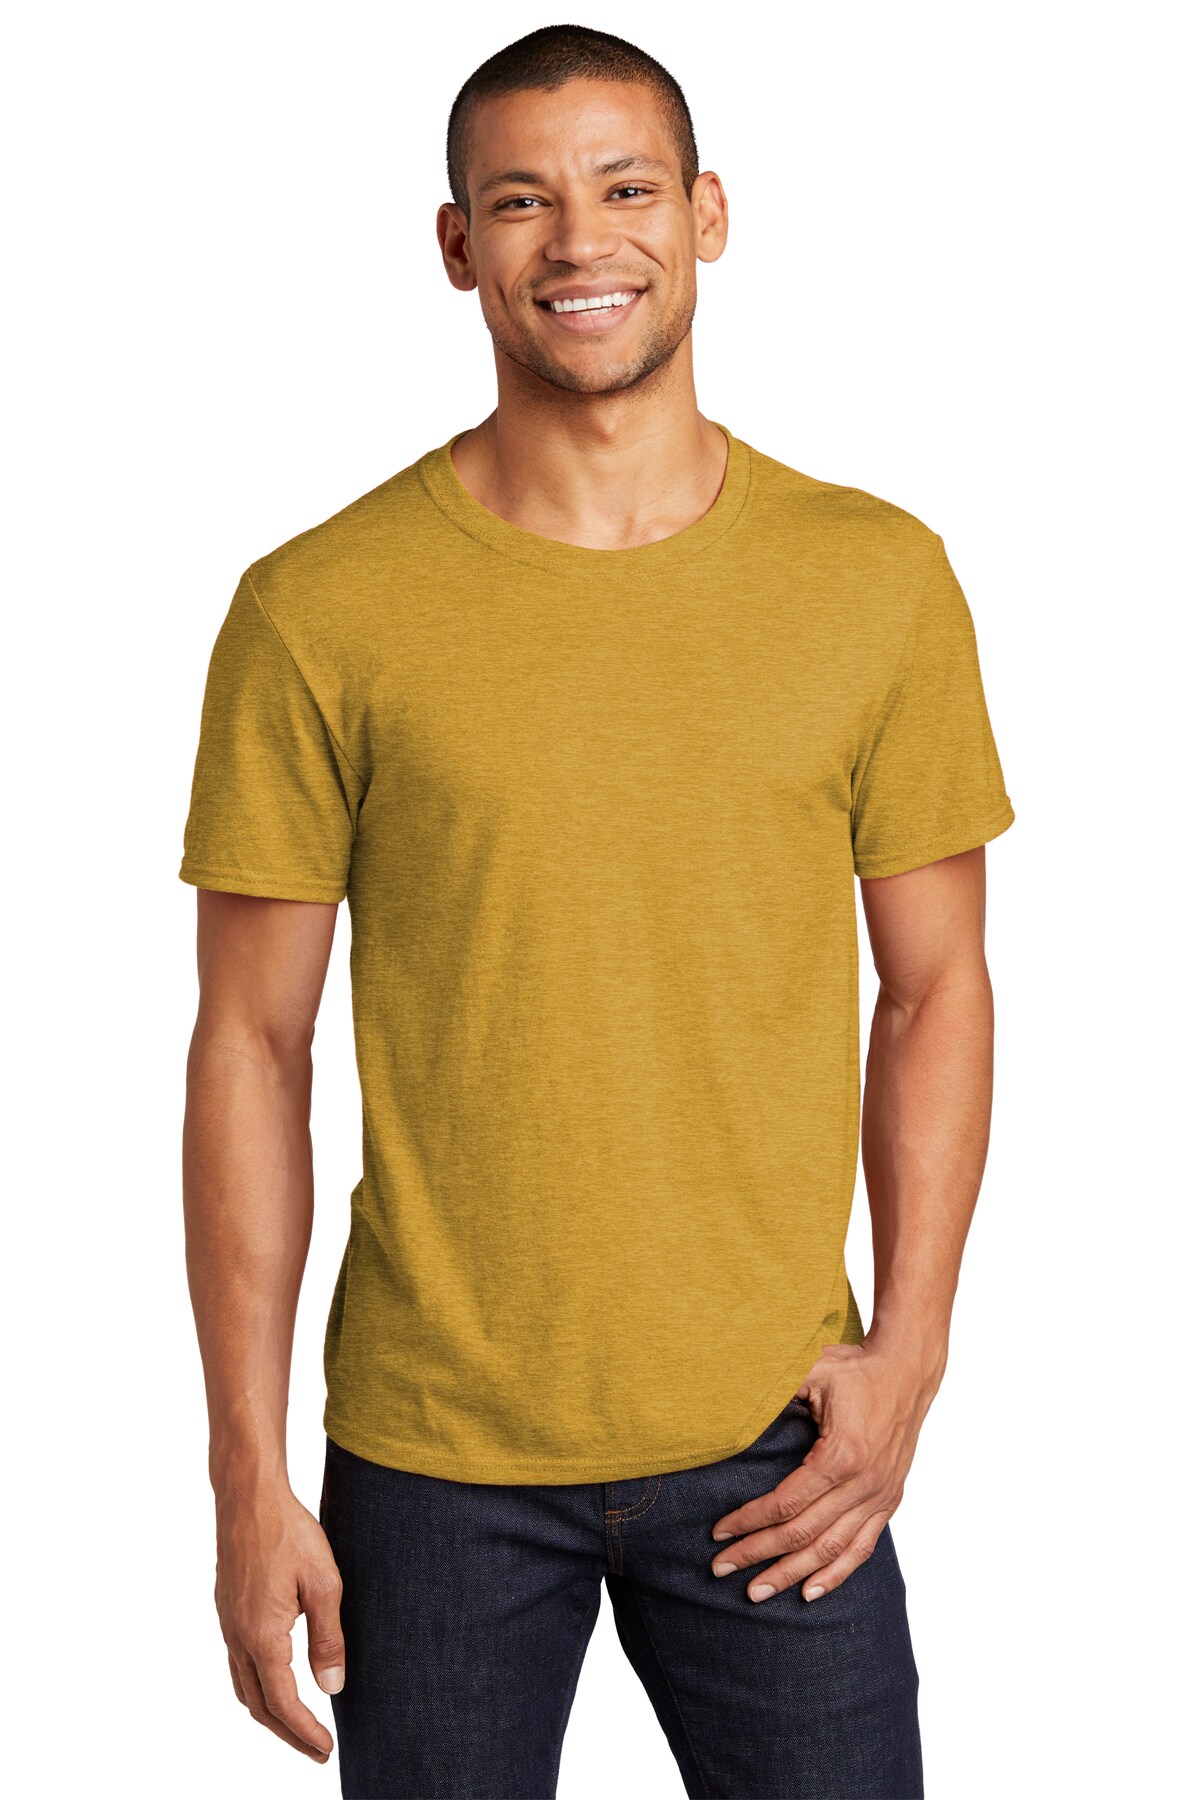 Men's Premium Ring Spun T-Shirt, 5.2-0z , 50/50 combed ring spun  cotton/poly, Durable, High Quality & Breathable T-Shirt for men's, RADYAN